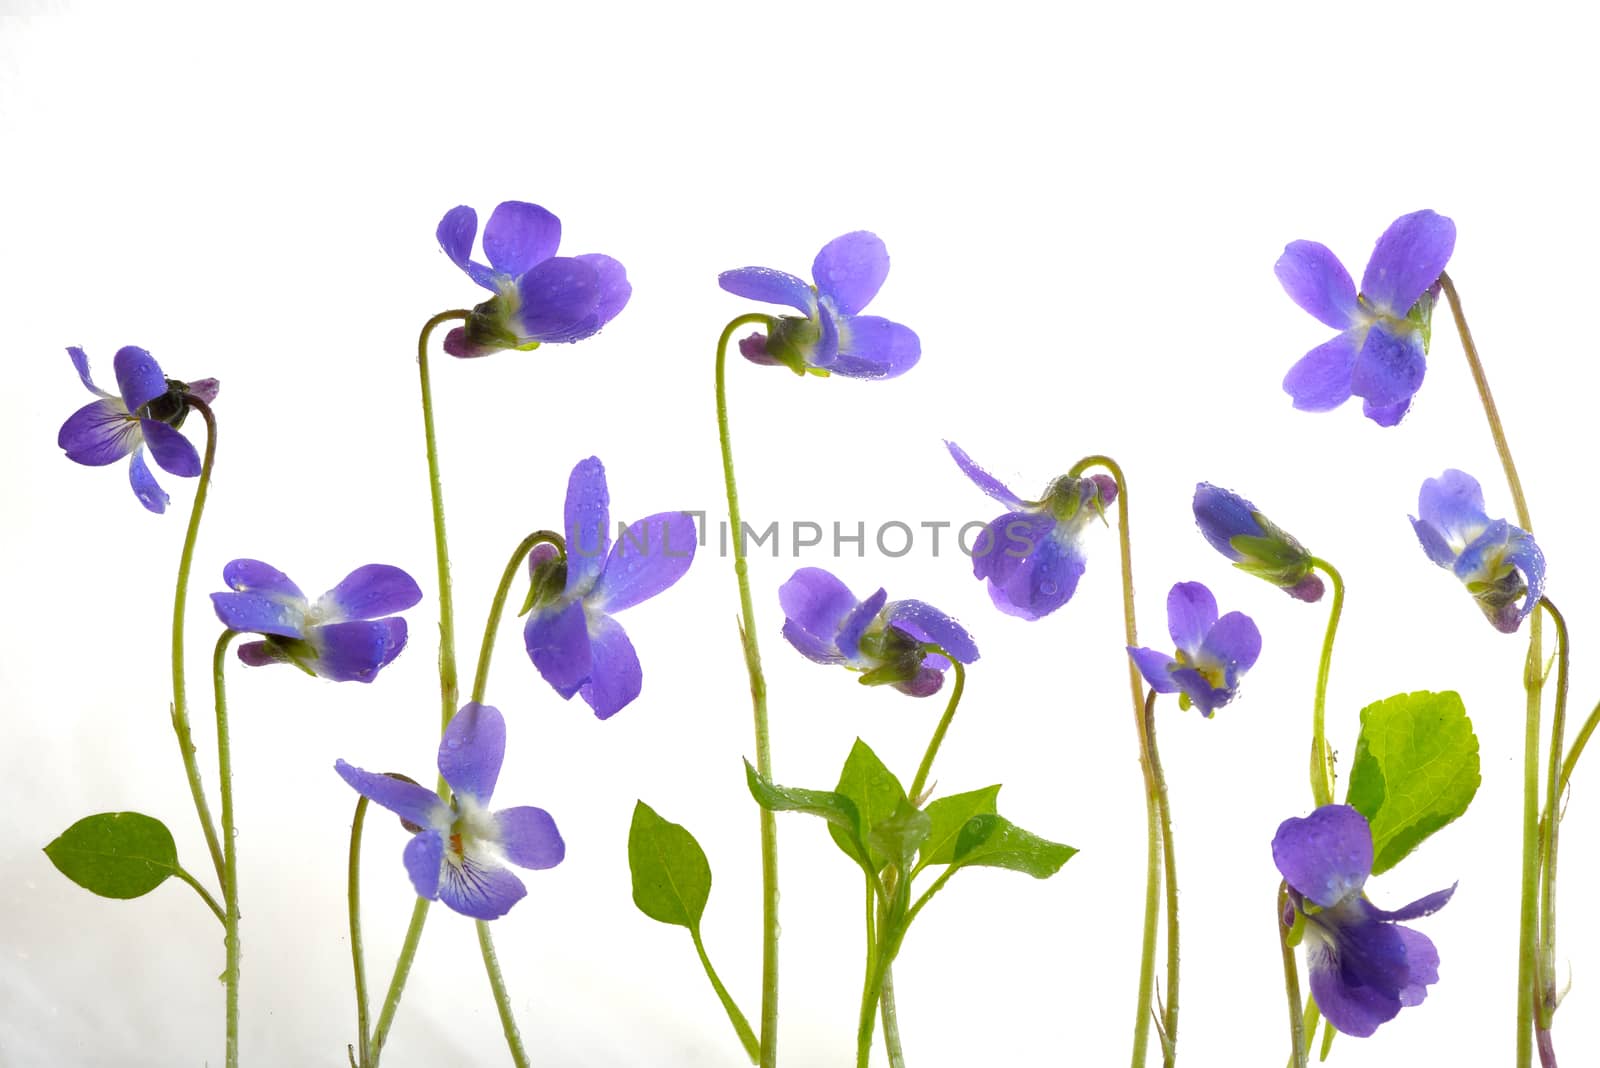 Viola odorata flowers by jordachelr